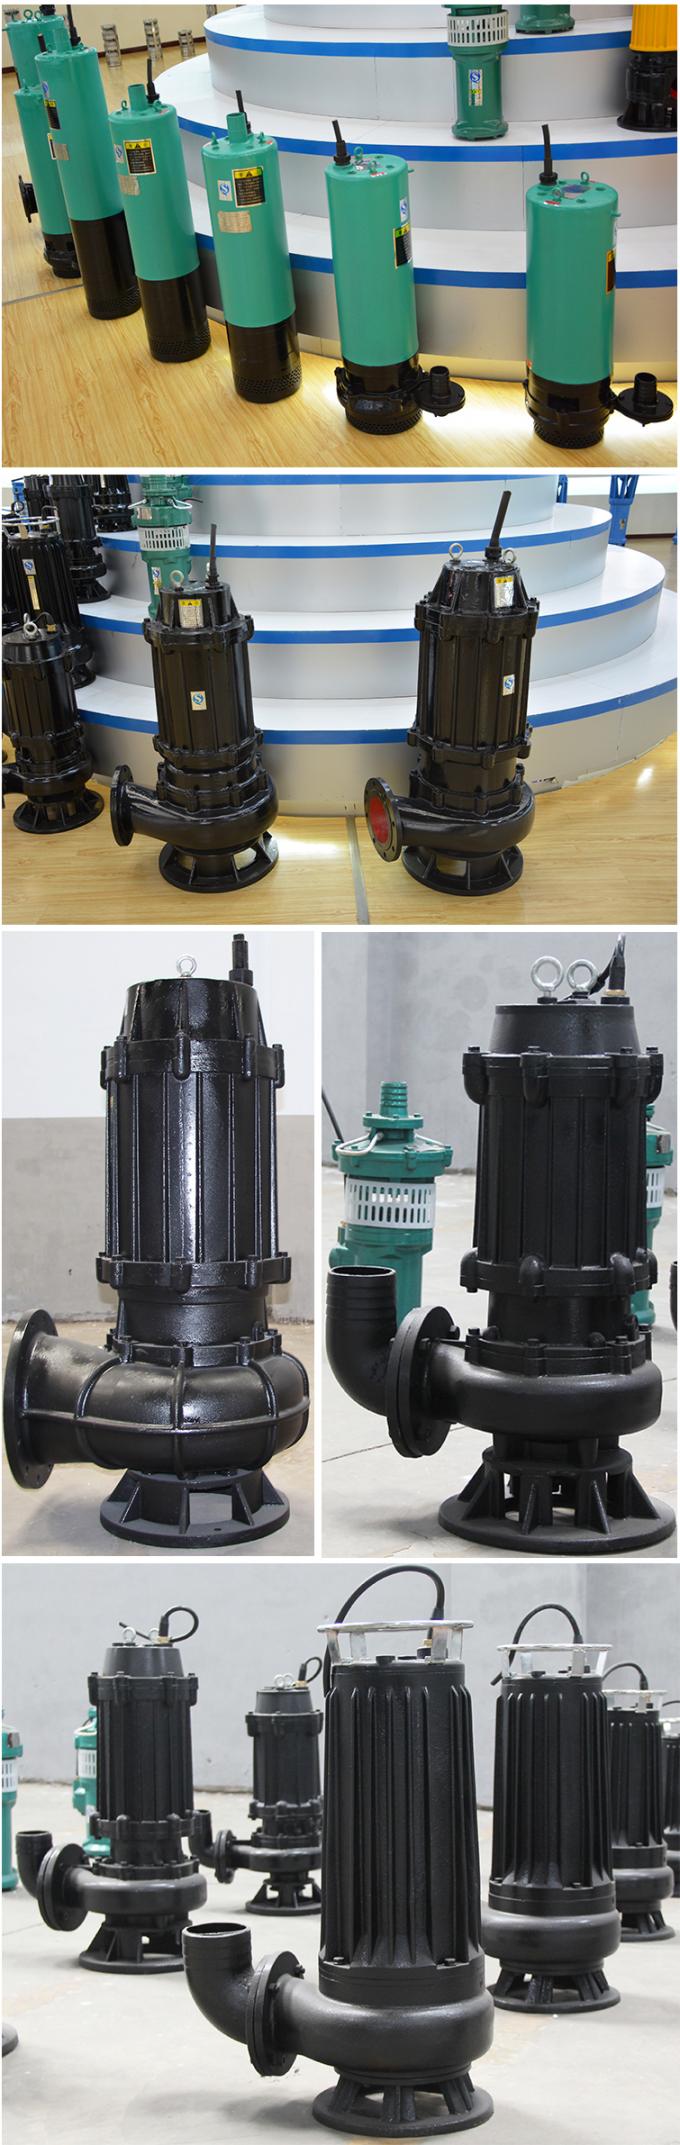 2.2kw-220kw Pompa Submersible Untuk Aplikasi Limbah, Pompa Air Kotor